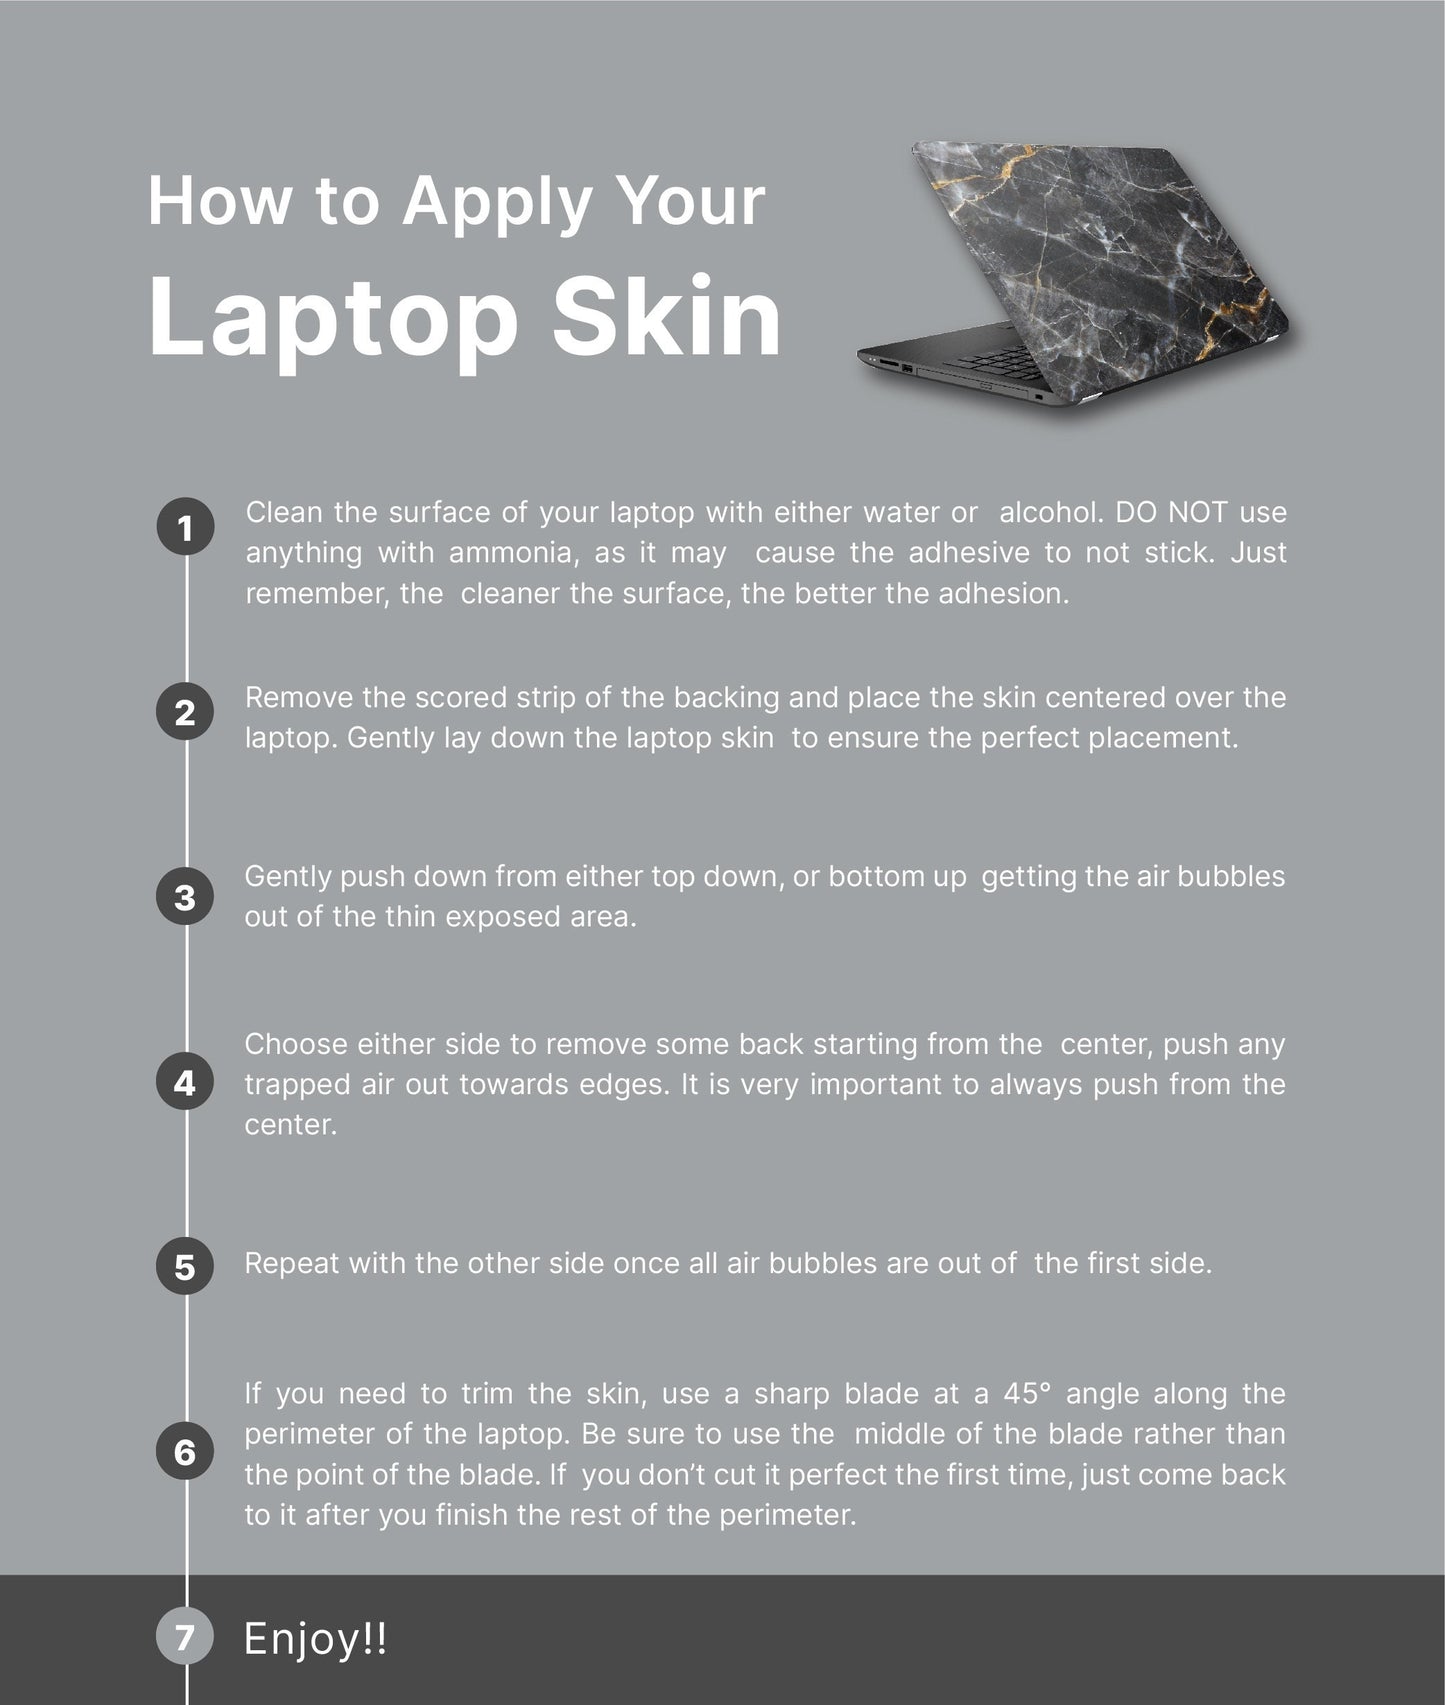 Tropical Vintage Laptop Skin, Laptop Cover, Laptop Skins, Removable Laptop Skins, Laptop Decal, Customized Laptop Skin, Laptop Stickers 247